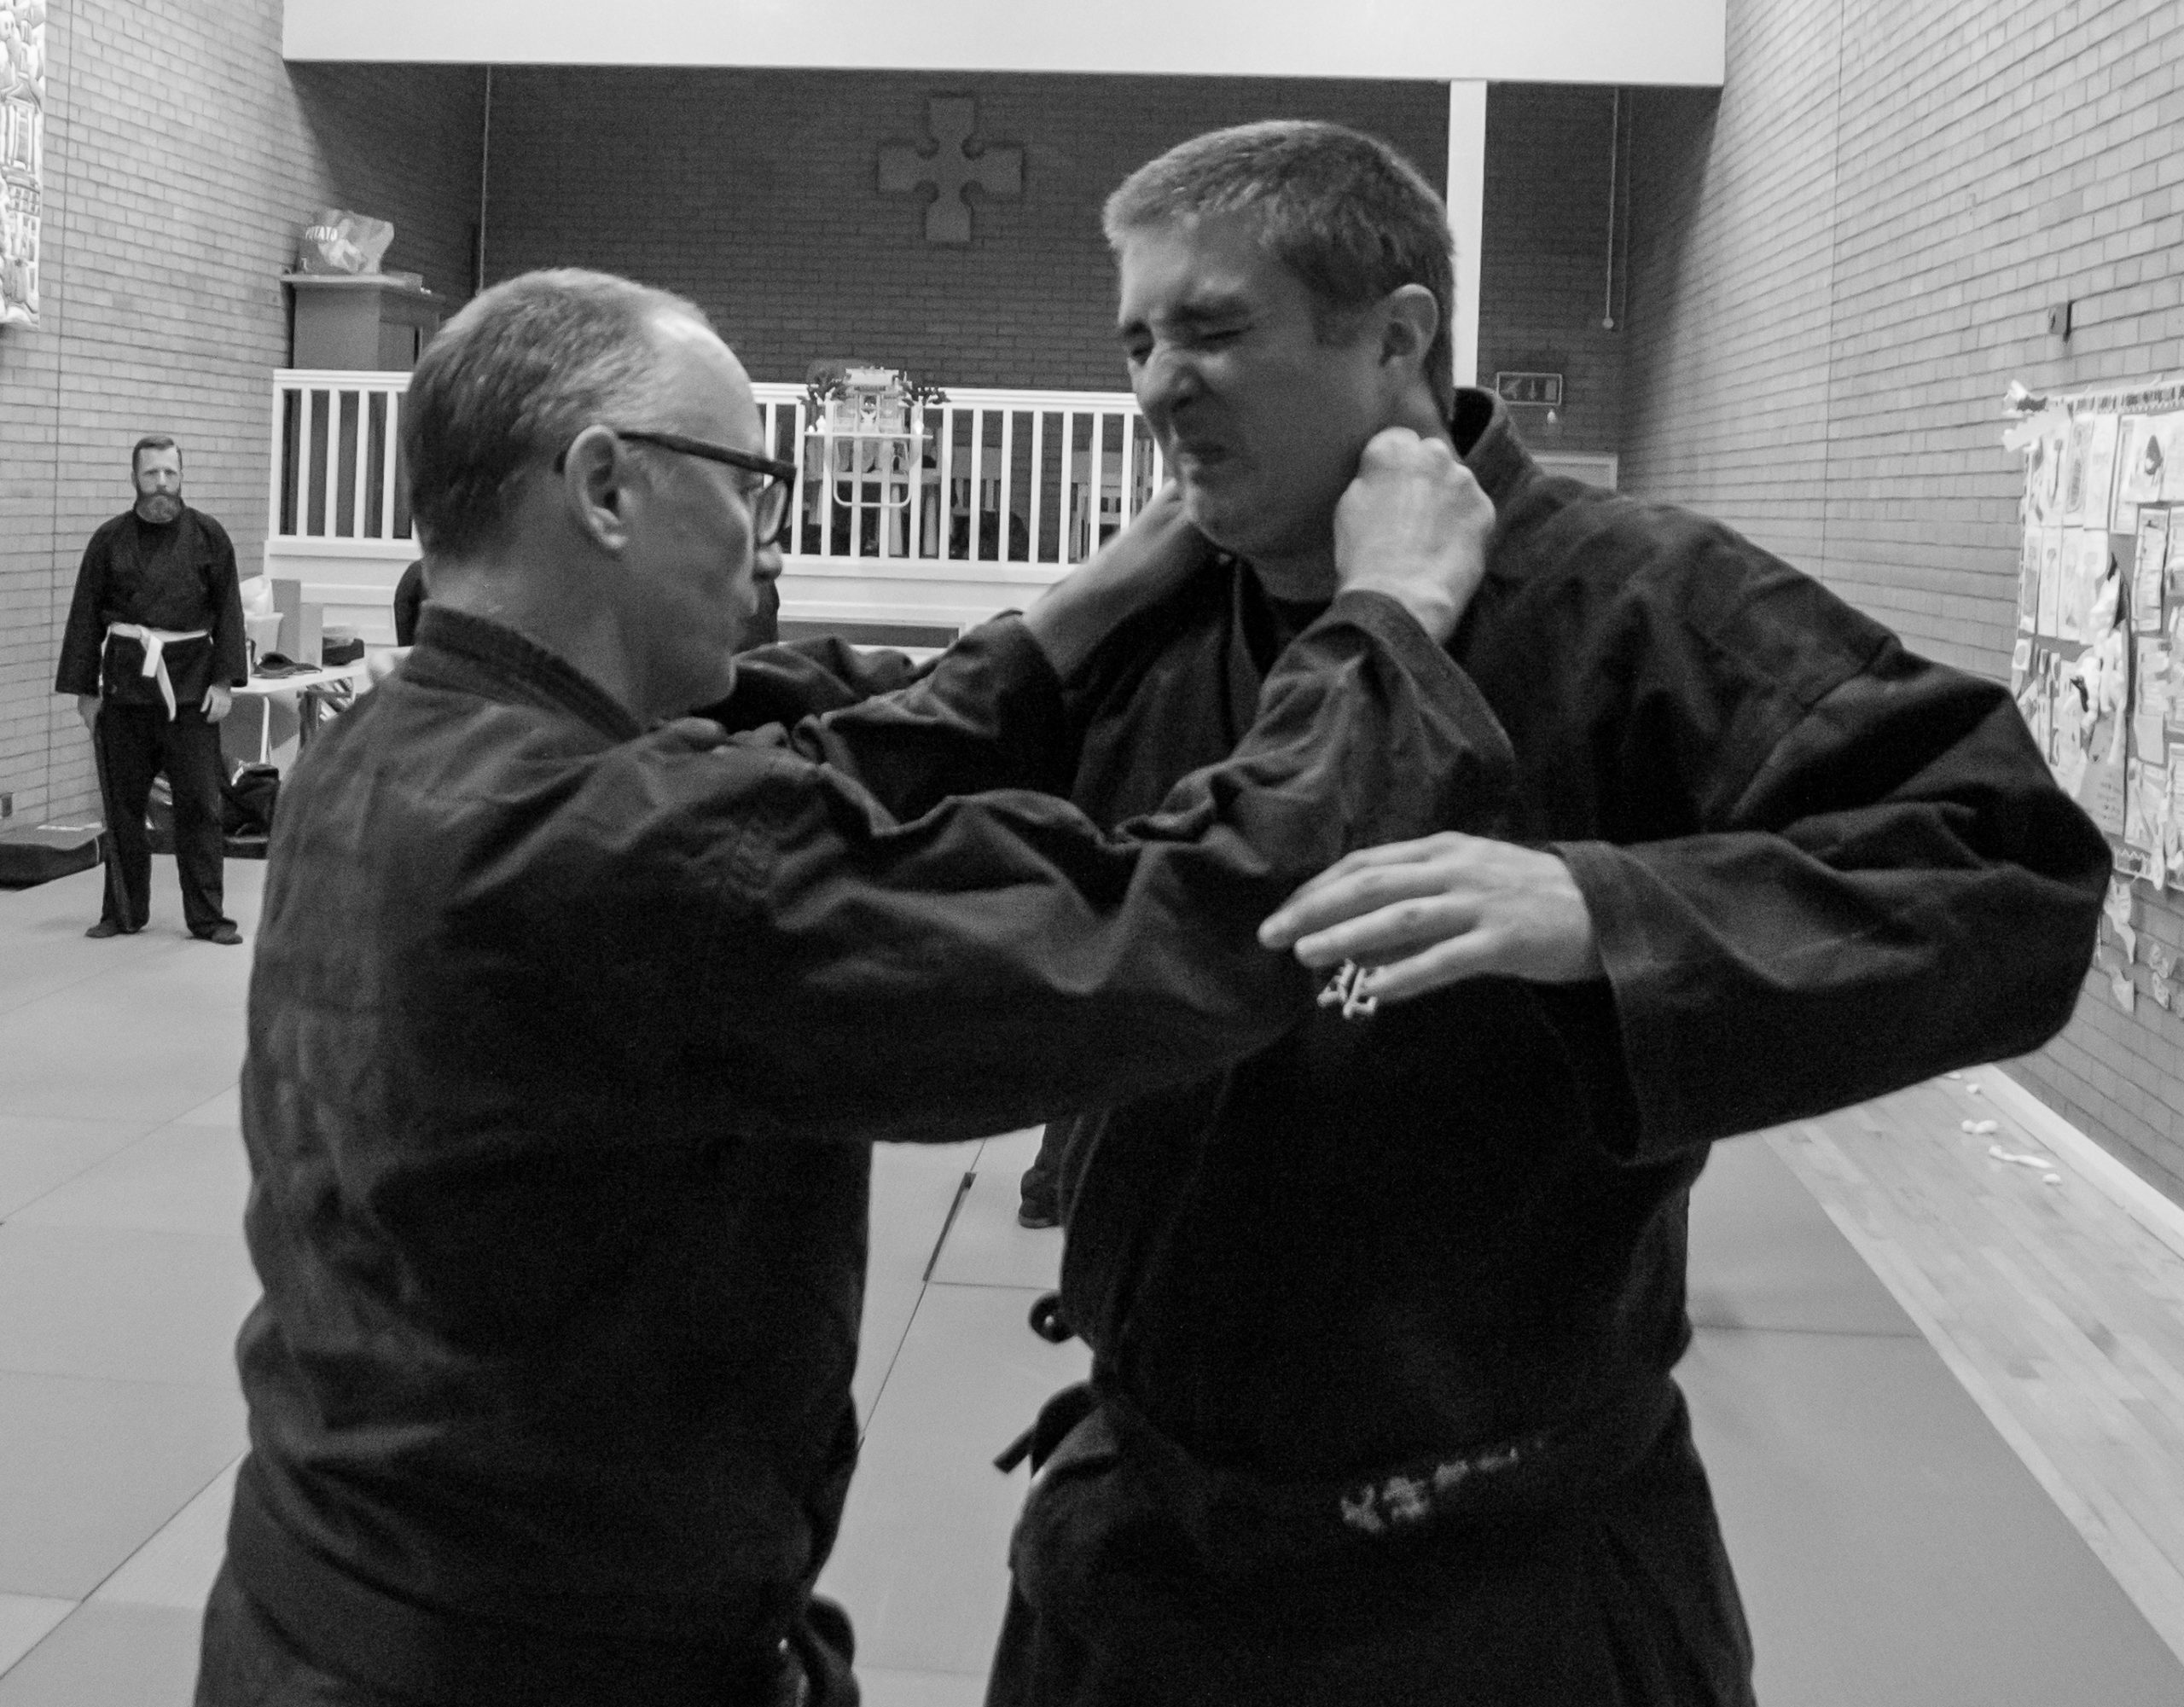 Training Bujinkan Martial arts in Dublin 2. Useful self defence technique for men or women